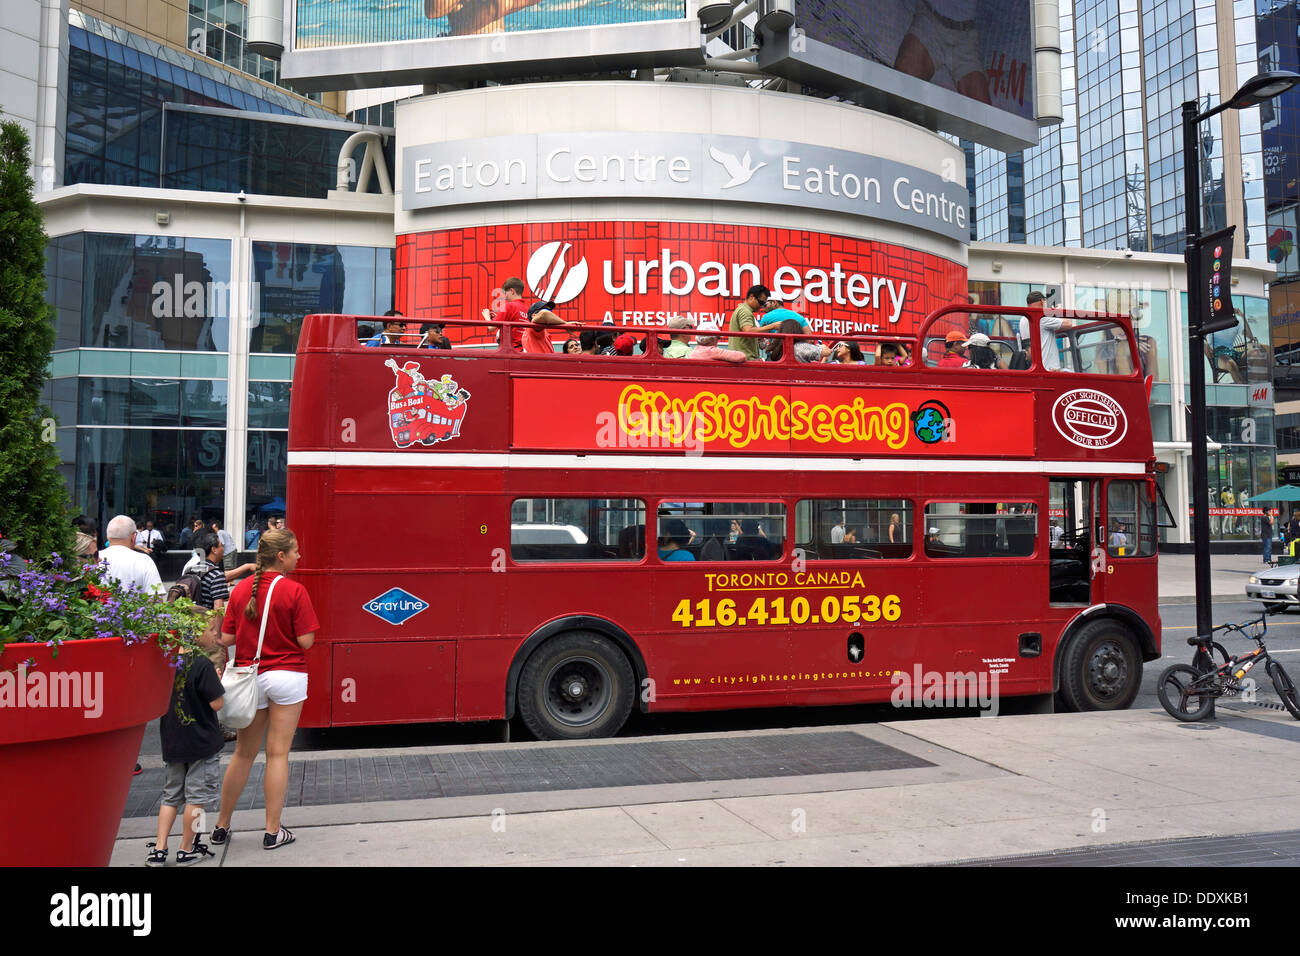 Toronto, Bus Turístico Hop On Hop Off, enfrente del centro Eaton Foto de stock